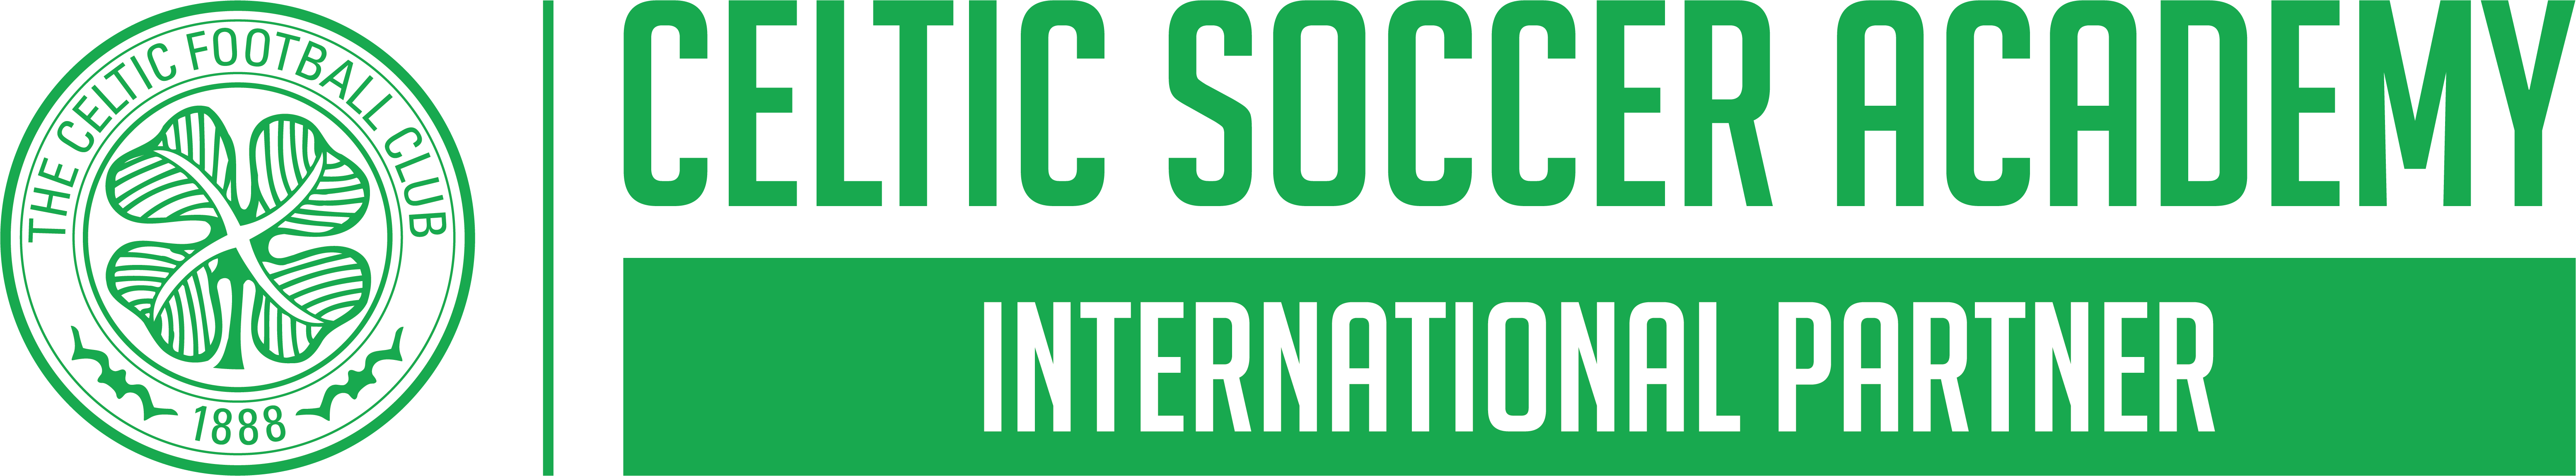 Celtic Soccer Academy Logo Green Landscape